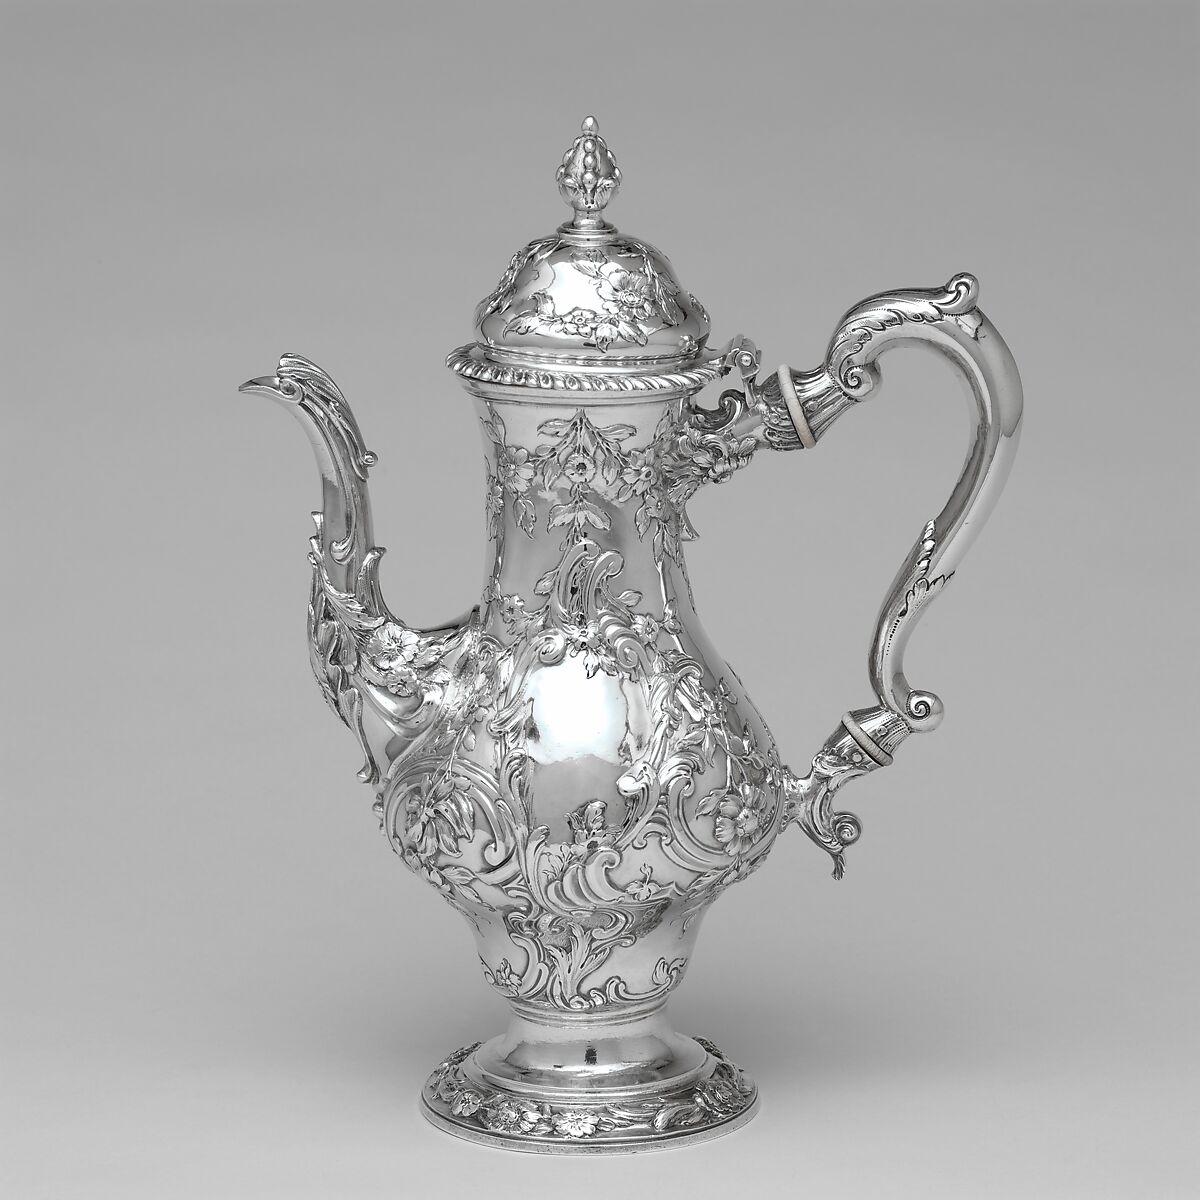 Coffeepot, Benjamin Brewood II (active from 1755), Silver, British 